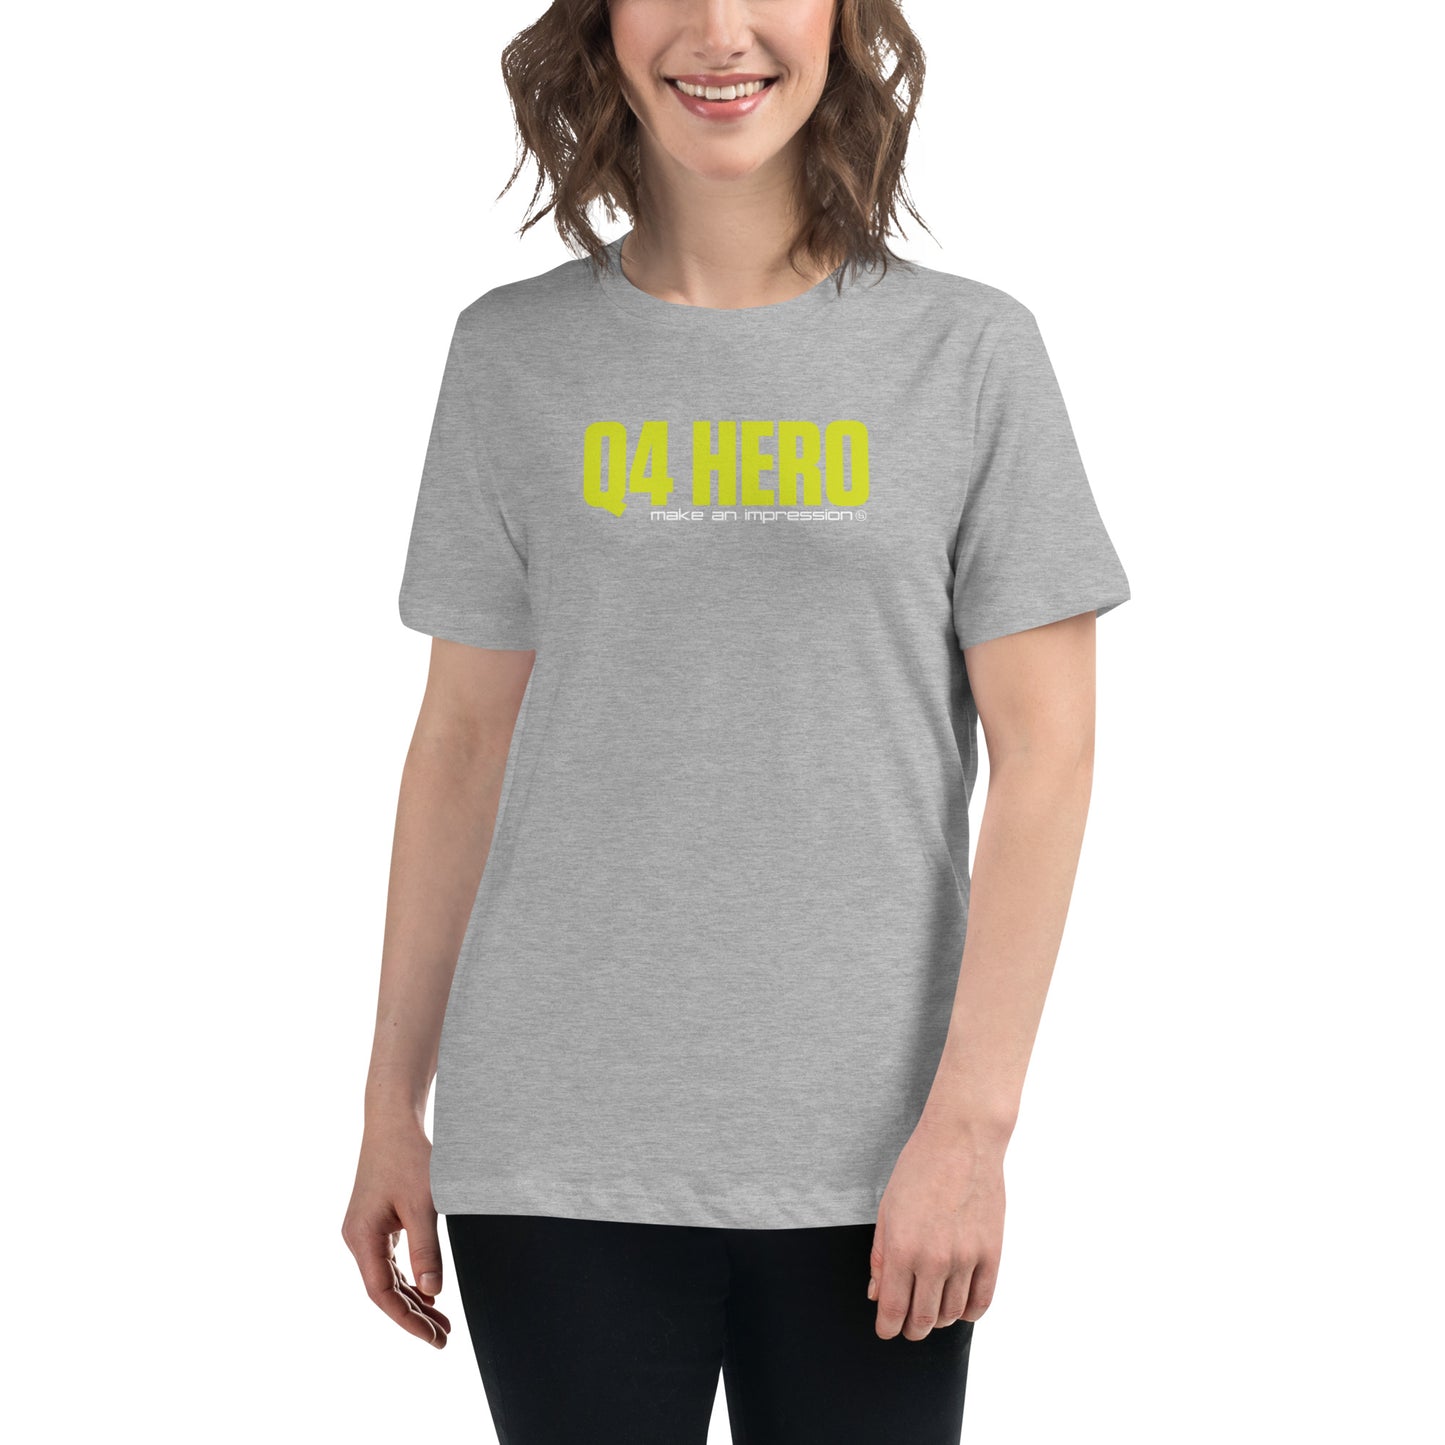 Q4 HERO T-Shirt - Women's Relaxed Cut - Safety Yellow